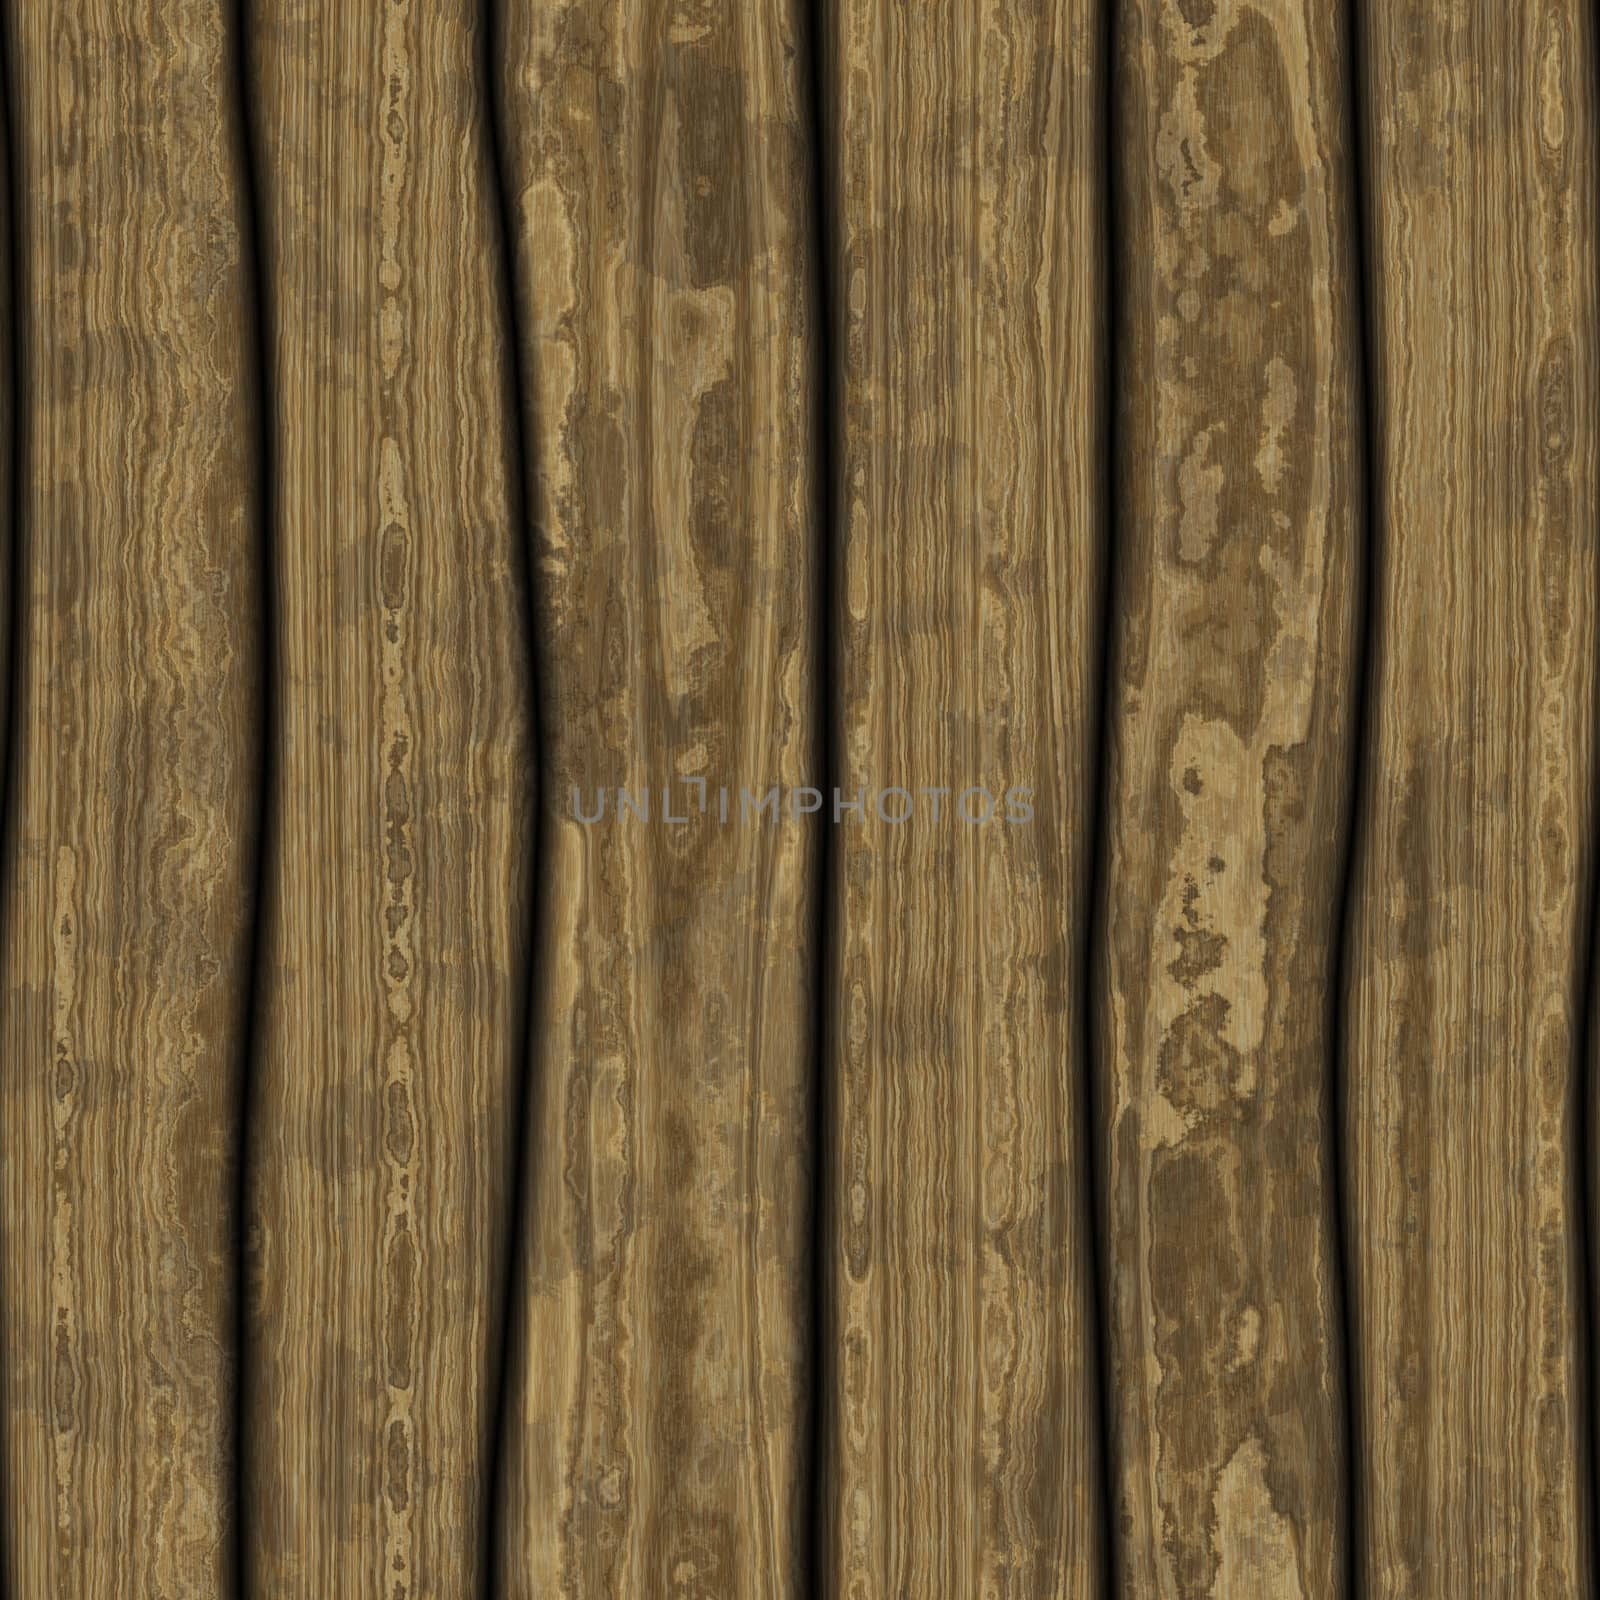  Wood plank